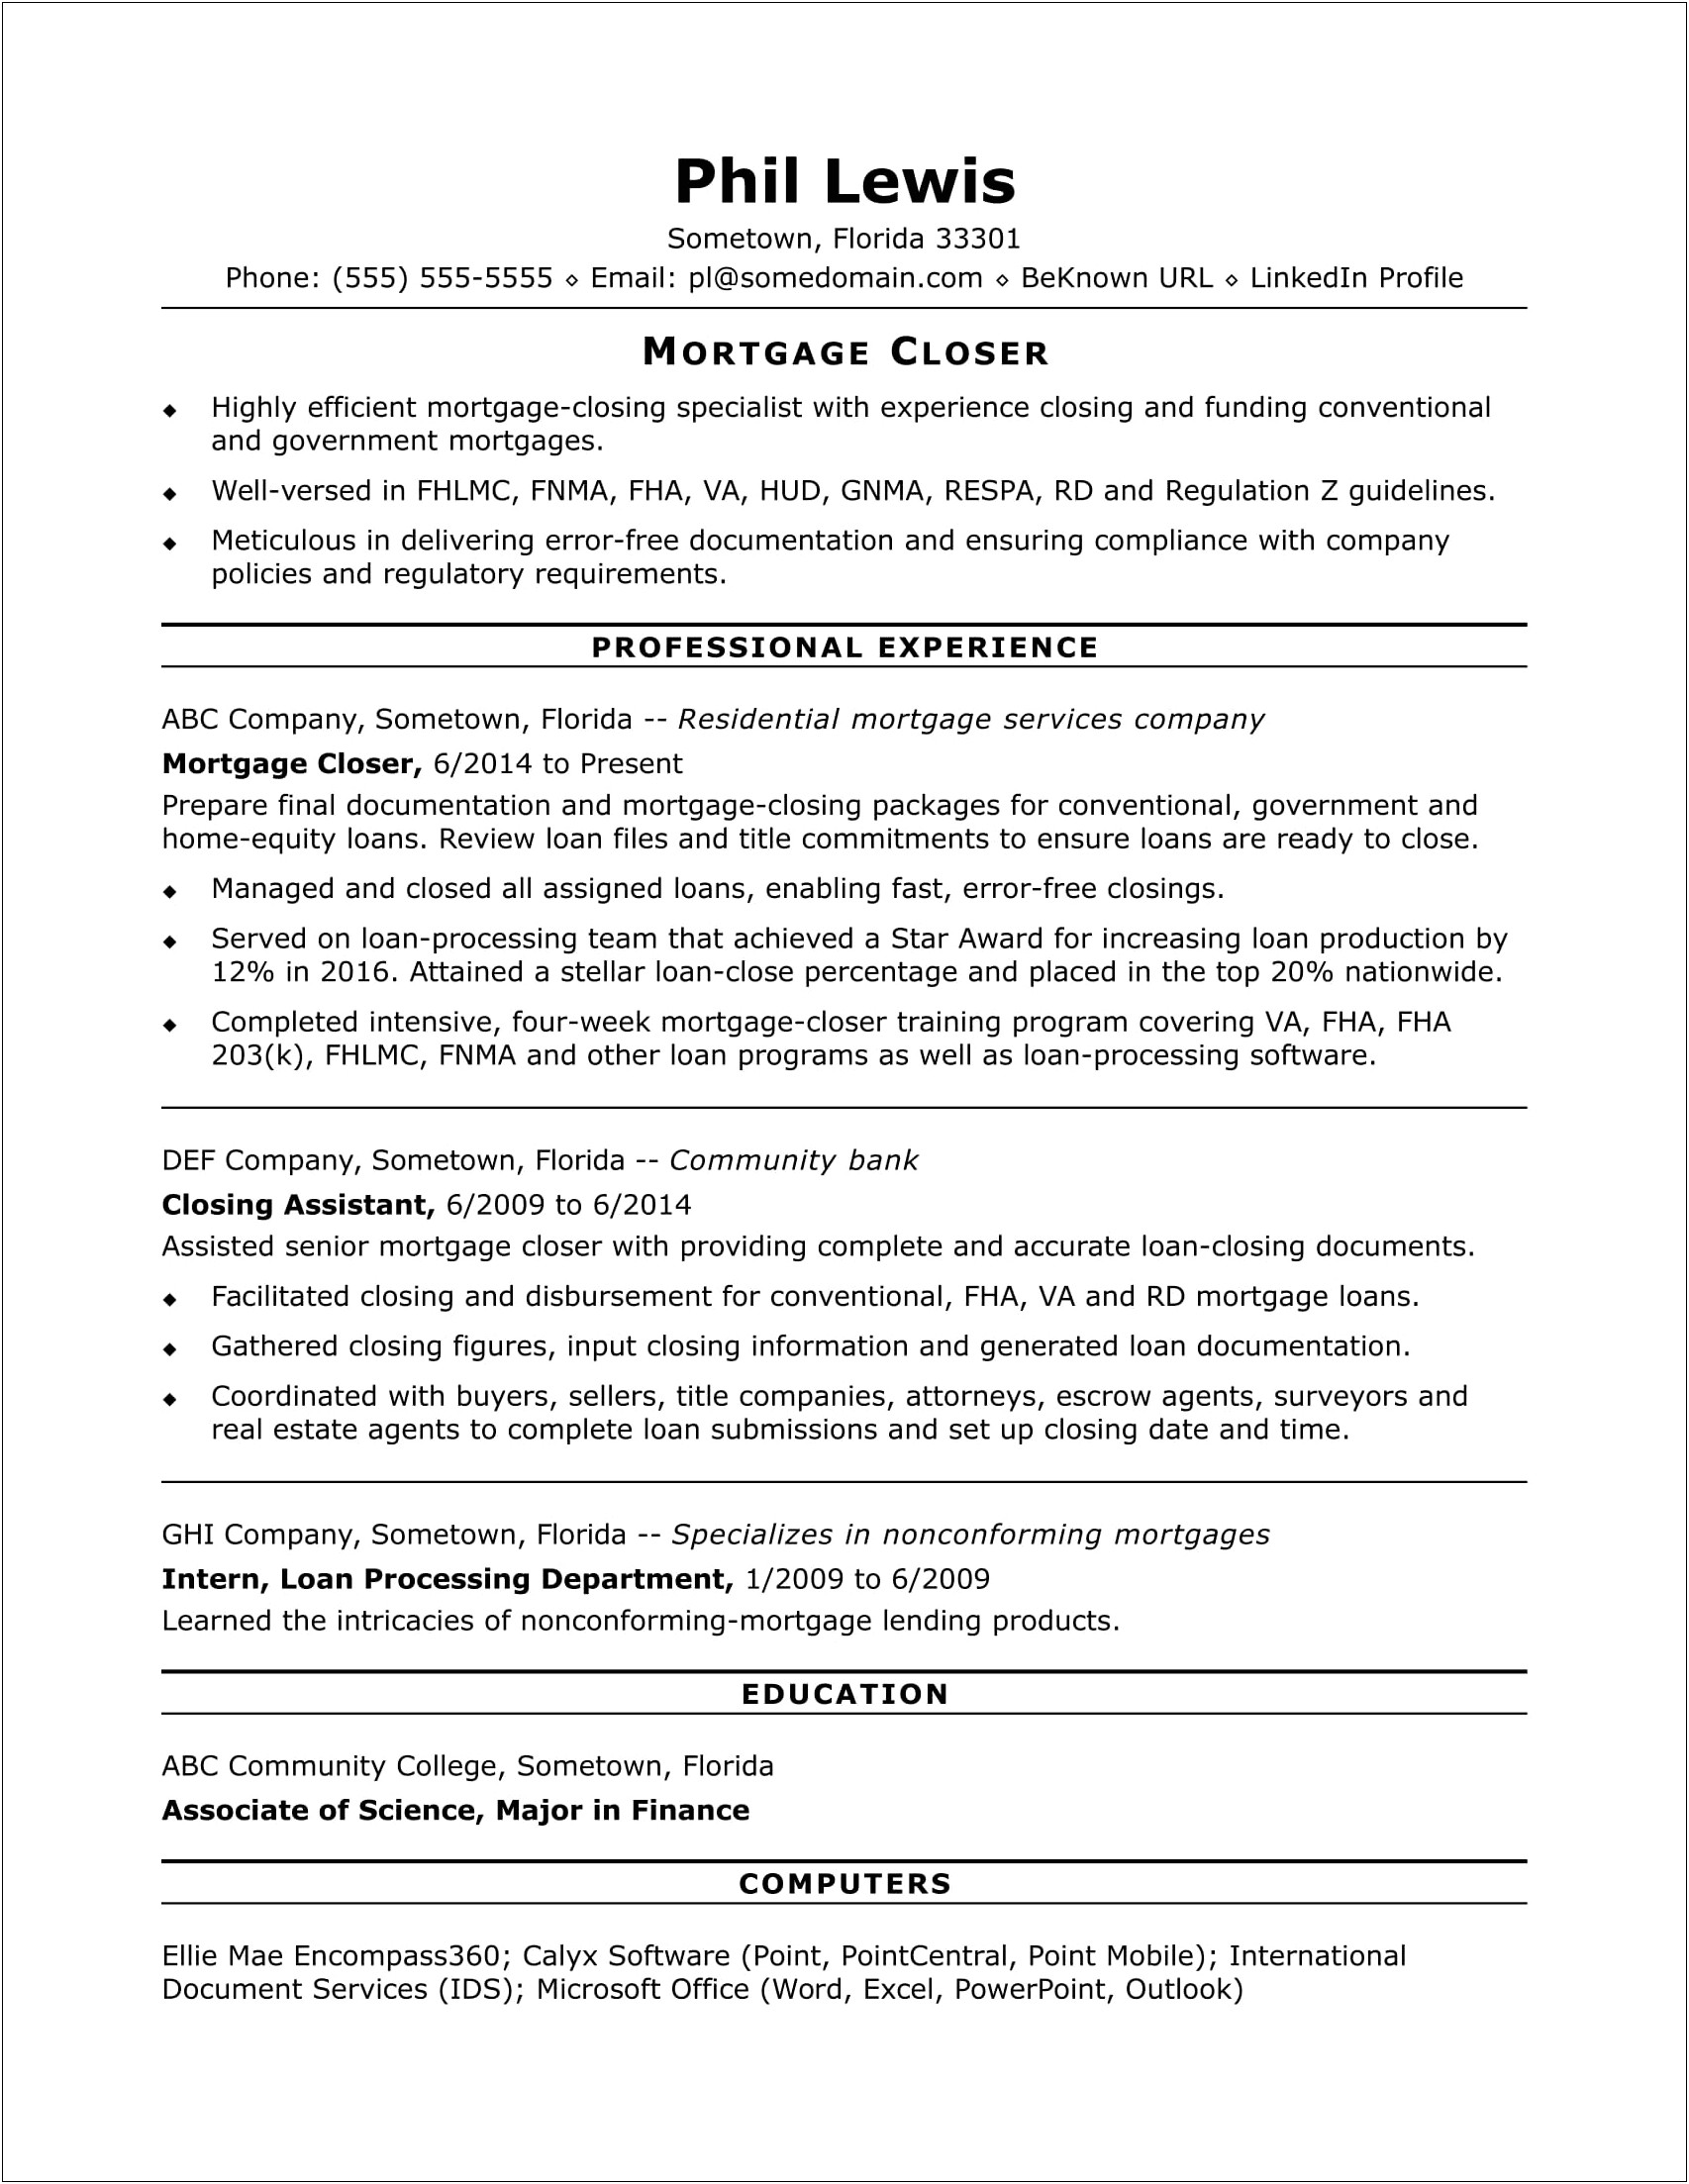 Bank Processor Job Description For Resume